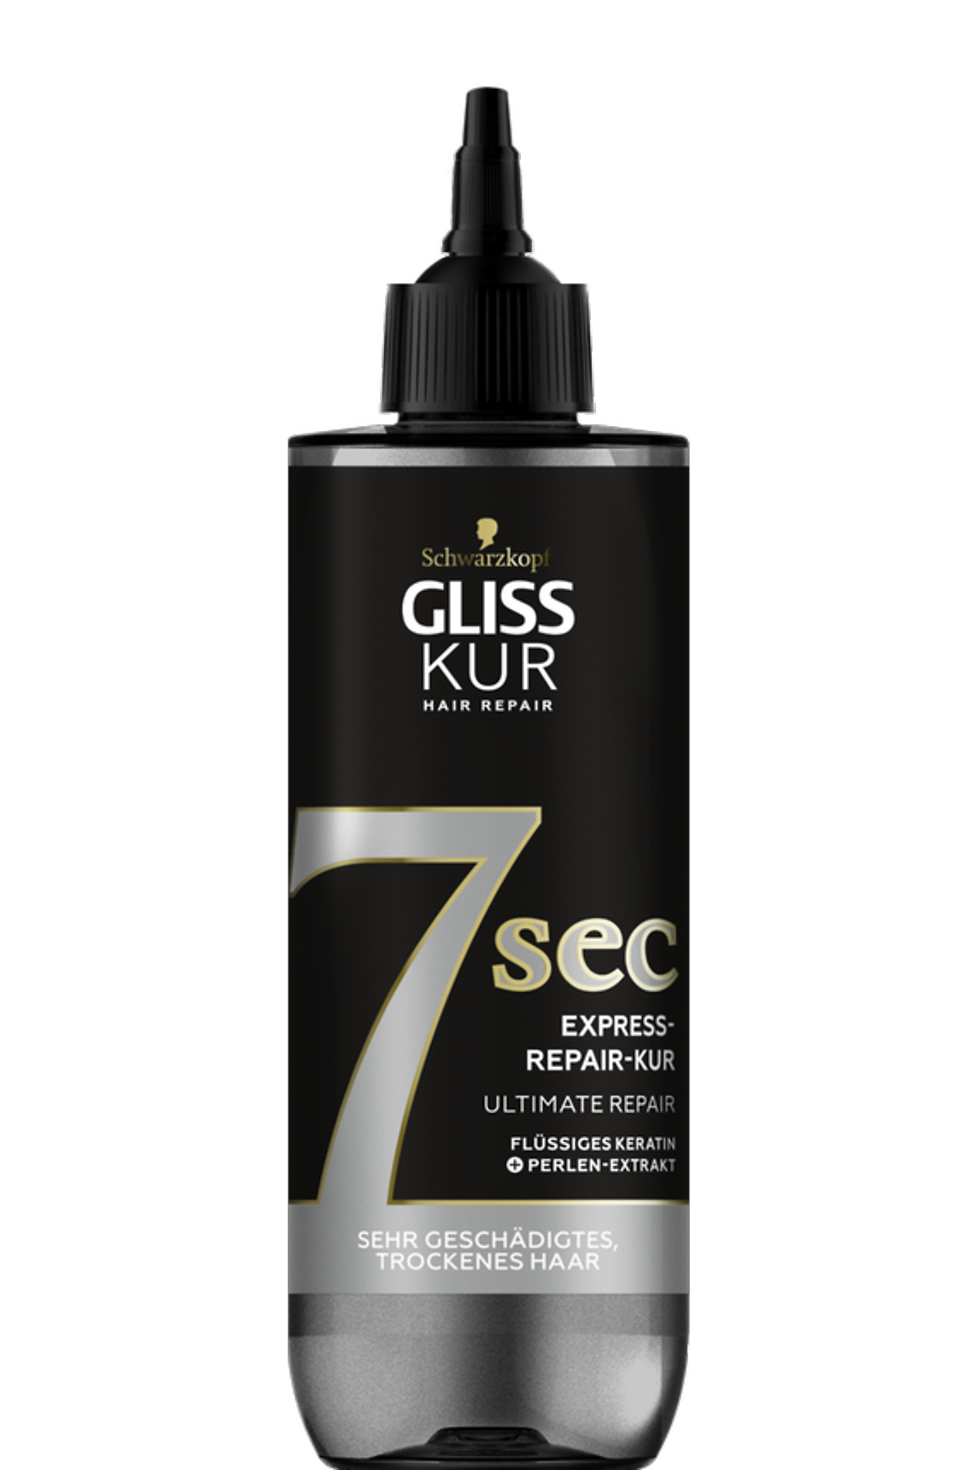 Gliss Kur 7 Sec Express-Repair-Kur Ultimate Repair